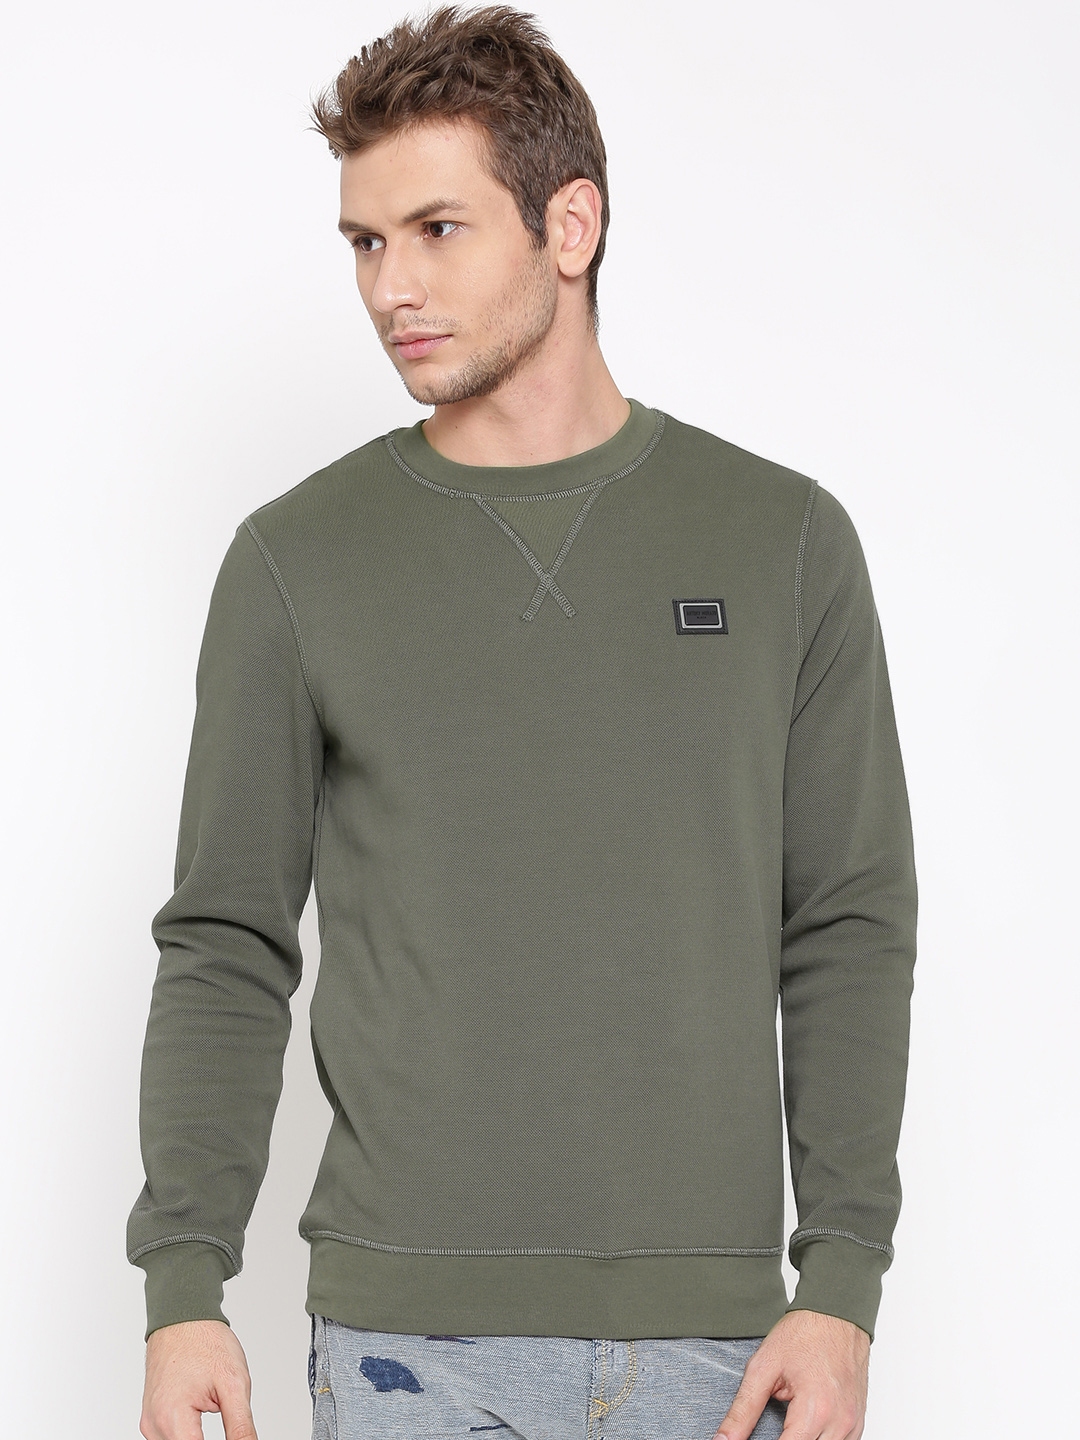 Buy Antony Morato Olive Green Sweatshirt - Sweatshirts for Men 1482074 ...